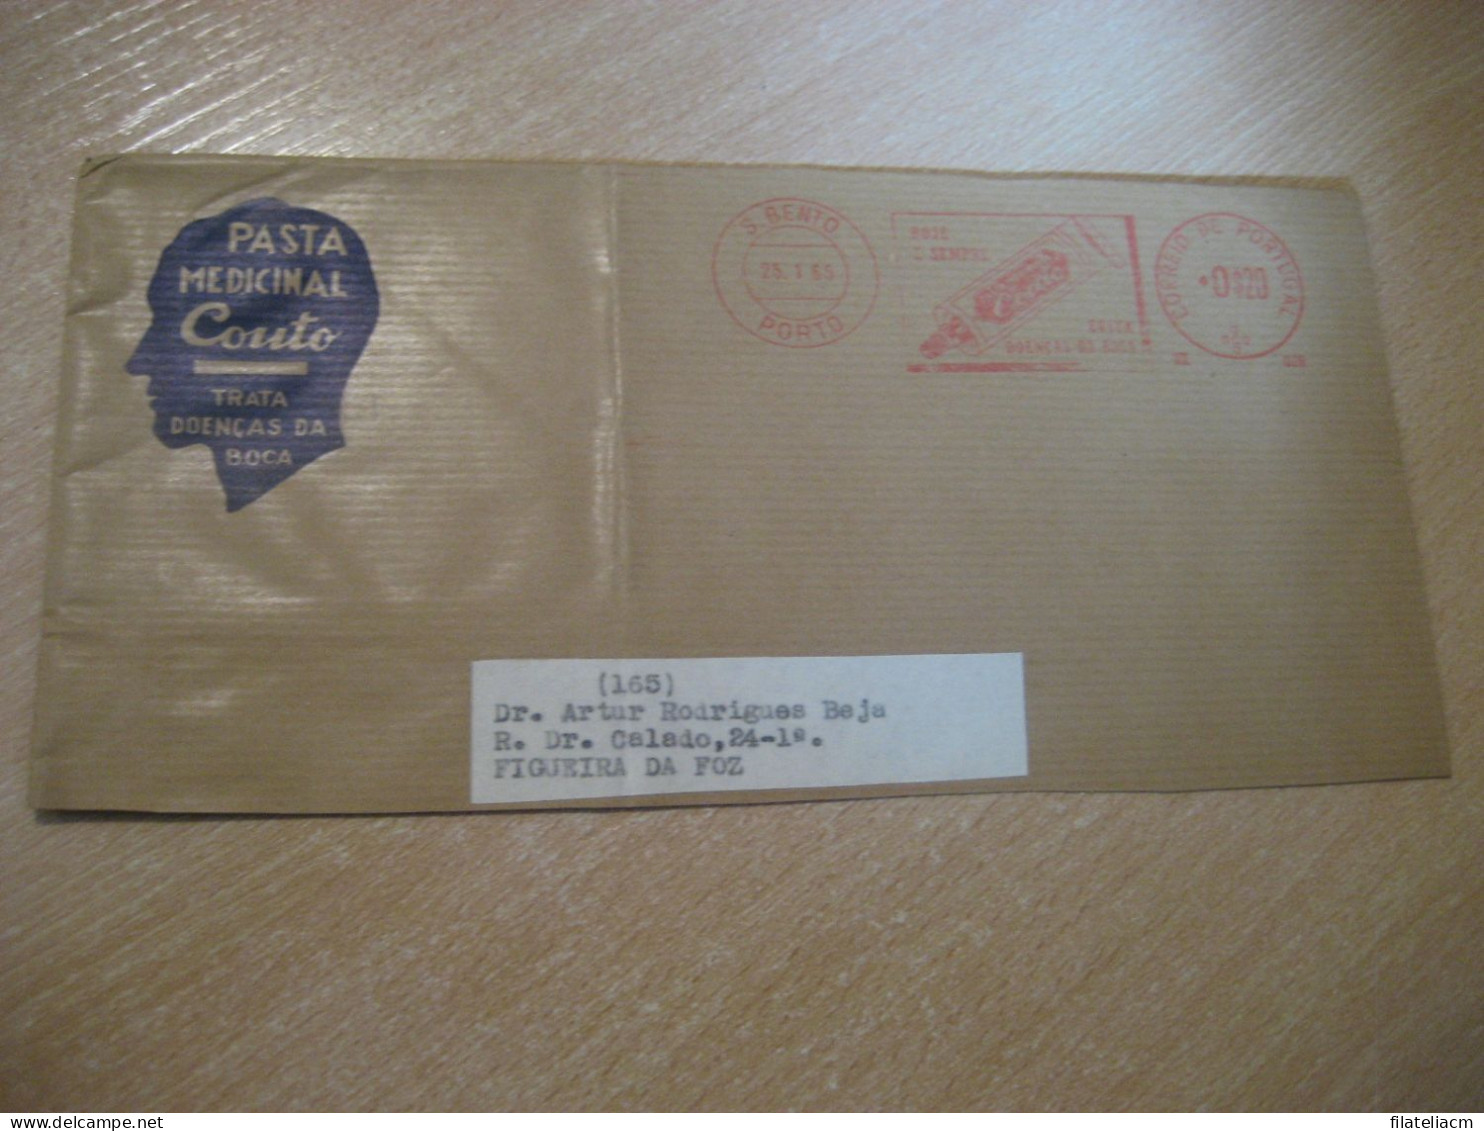 PORTO 1965 T Figueira Da Foz Pasta Medicinal COUTO Boca Pharmacy Health Sante Meter Mail Cancel Cut Cuted Cover PORTUGAL - Storia Postale